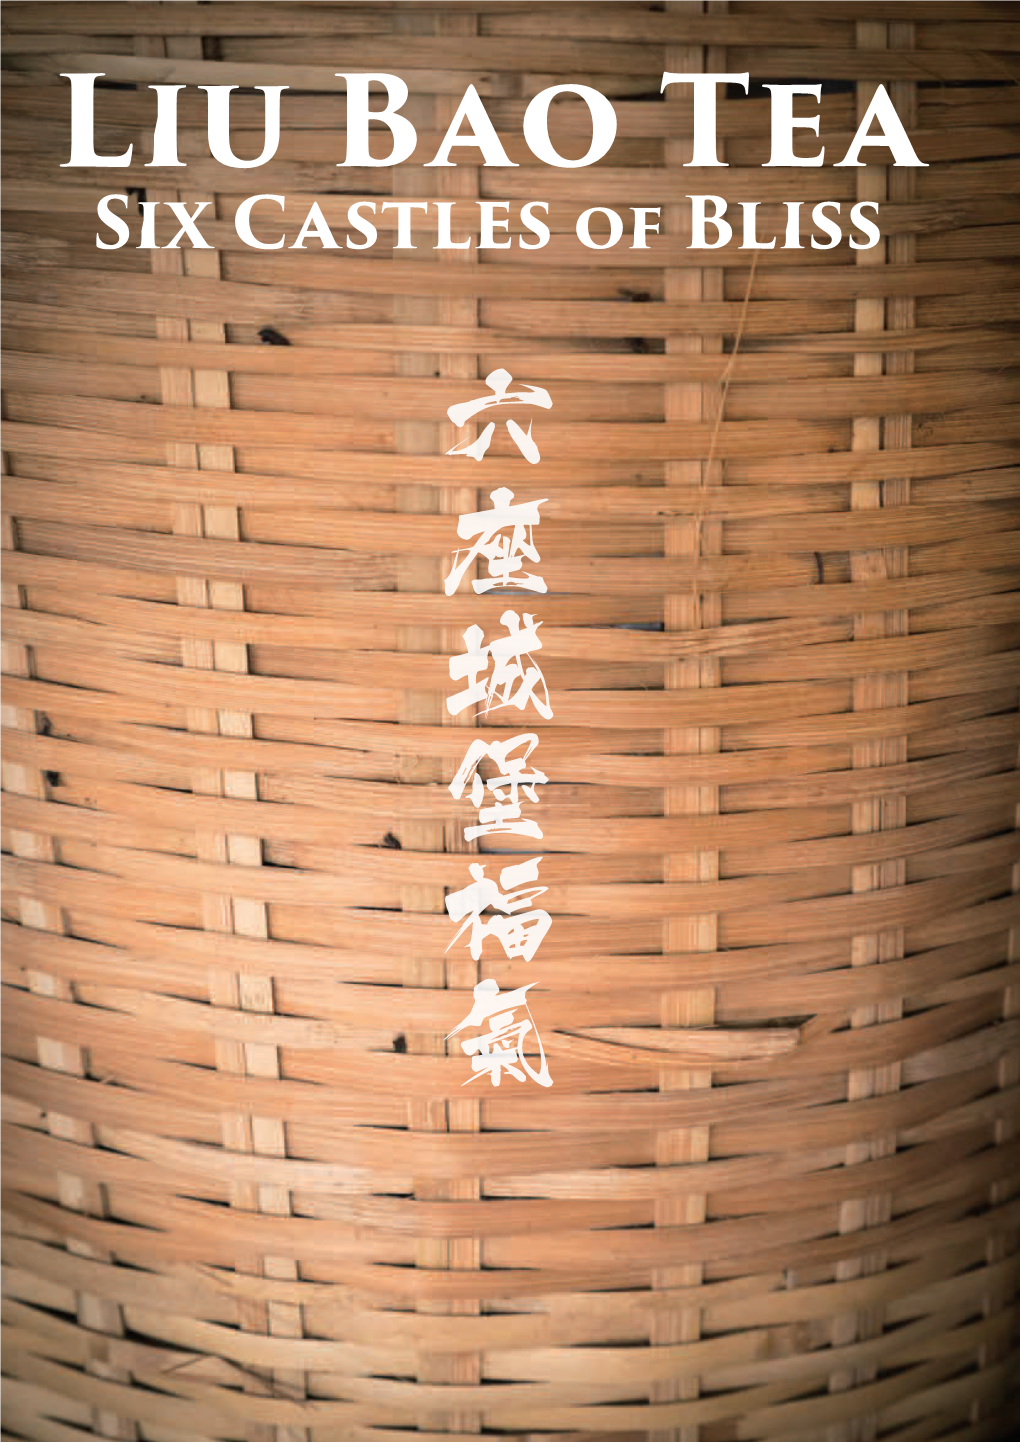 Liu Bao Tea Six Castles of Bliss 六 座 城 堡 福 氣 茶人: Wu Ping Honorary Deputy President of the Wuzhou City Liu Bao Tea Association 六